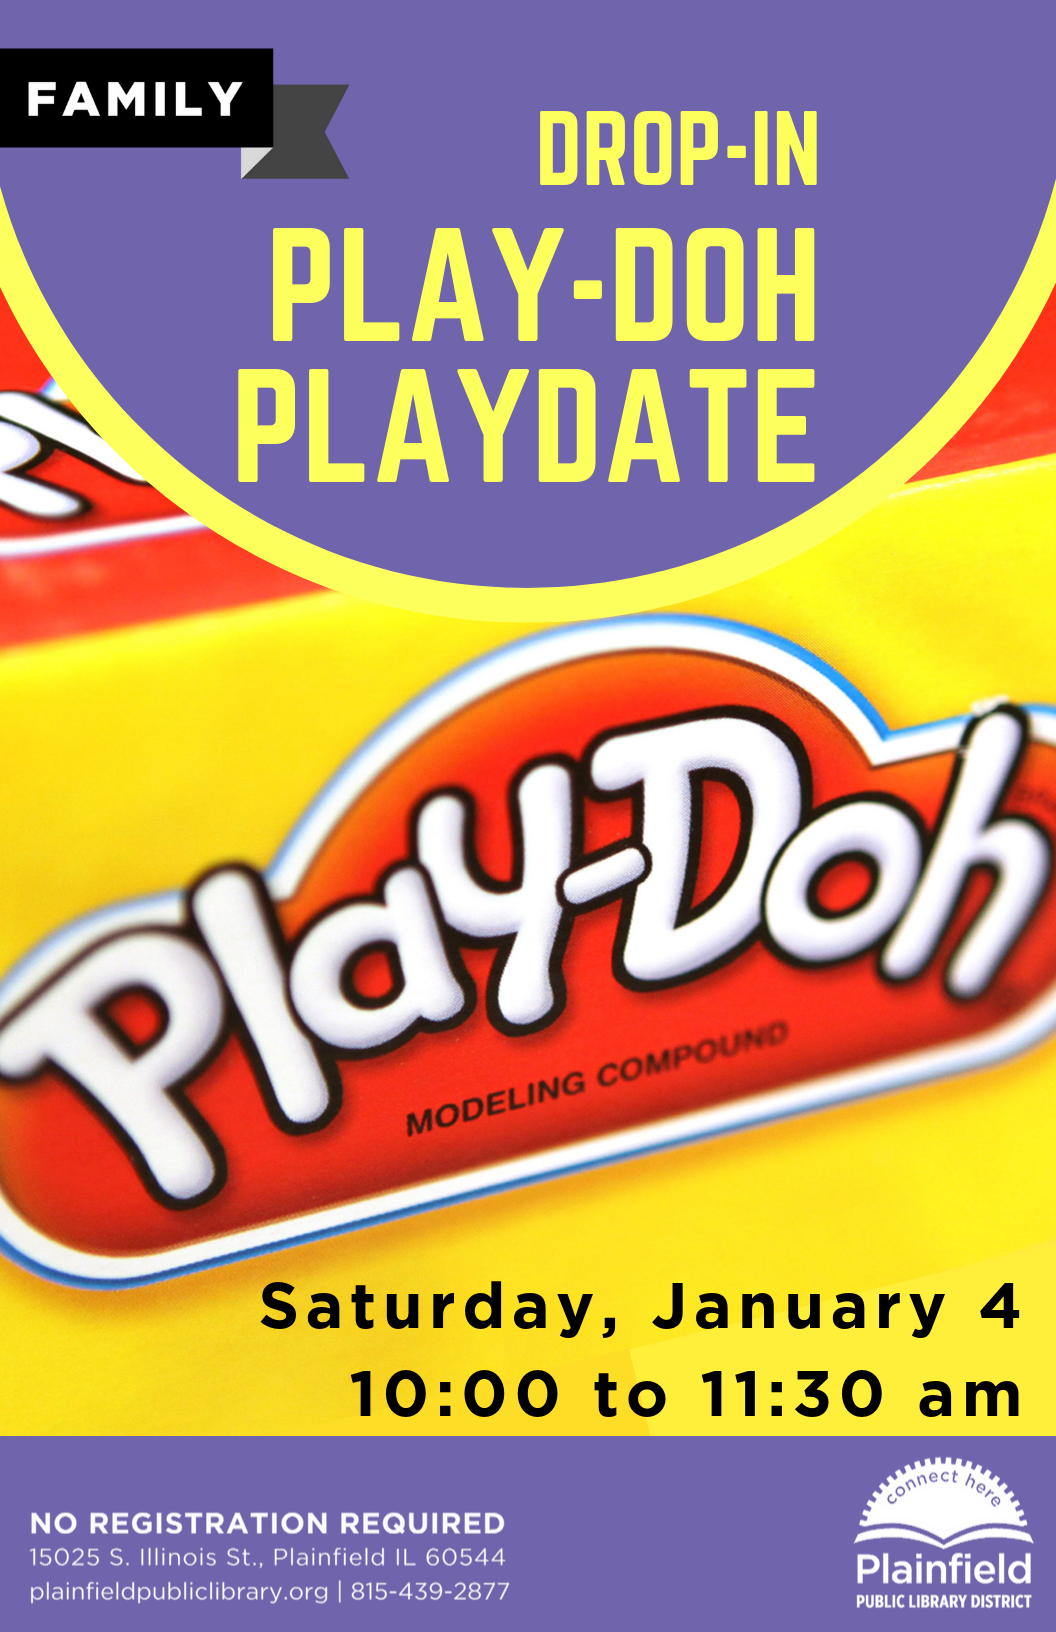 Play-Doh Playdate